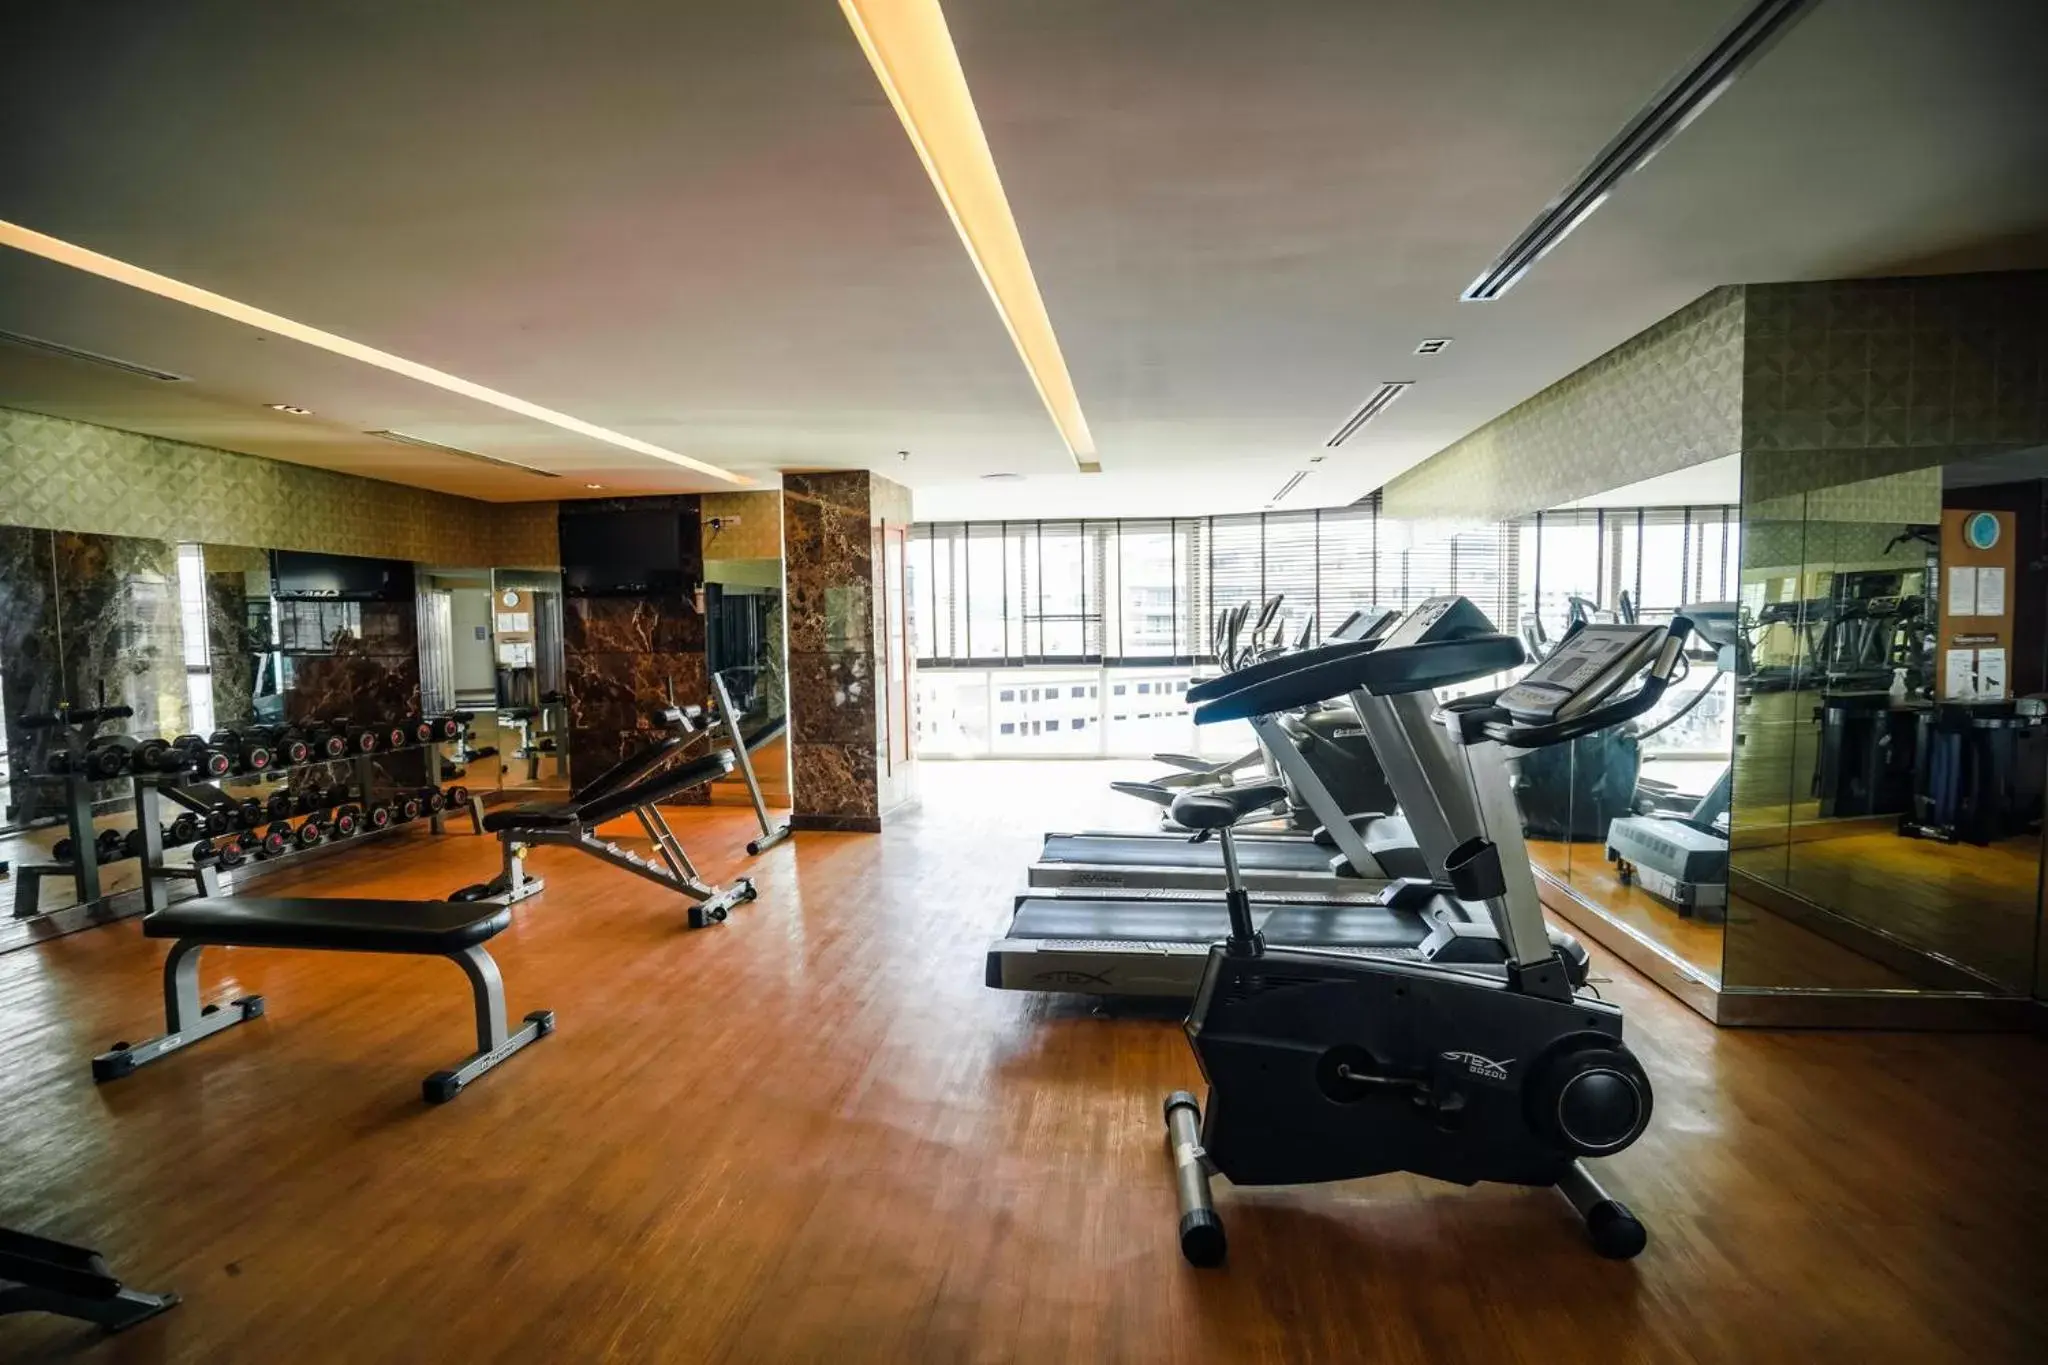 Fitness centre/facilities, Fitness Center/Facilities in Centara Nova Hotel and Spa Pattaya